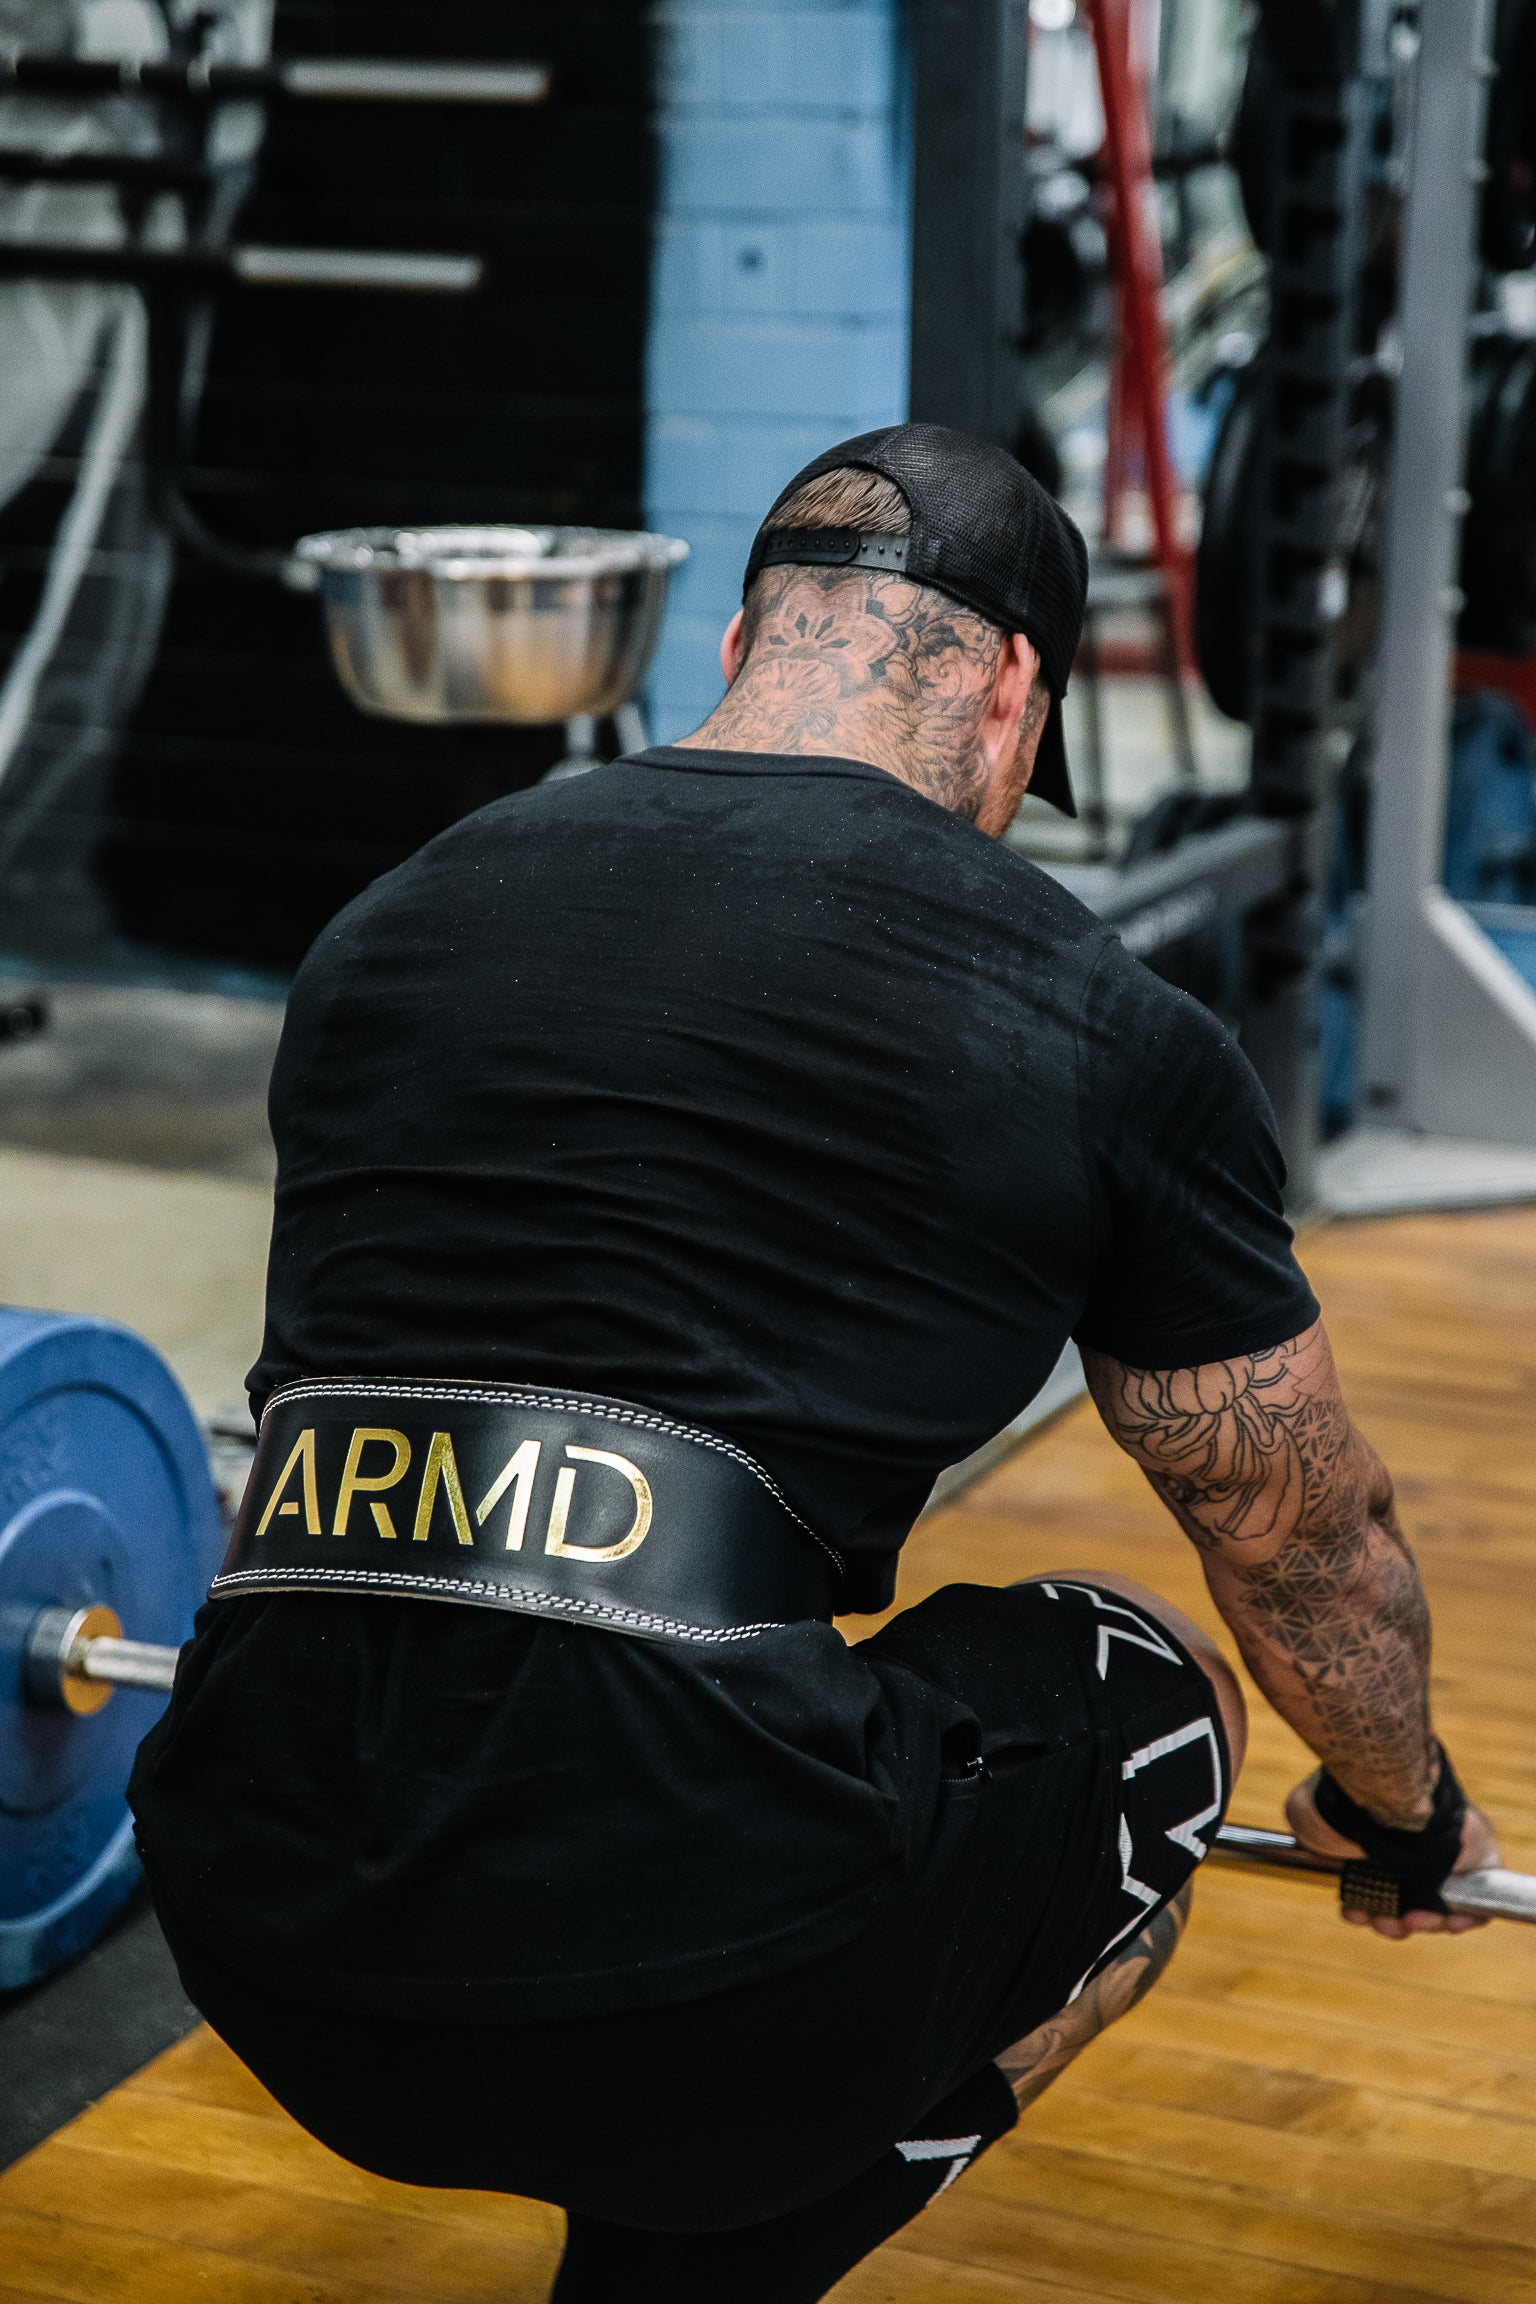 ARMD 4" Leather Weight Lifting Belt - ARMD HQ